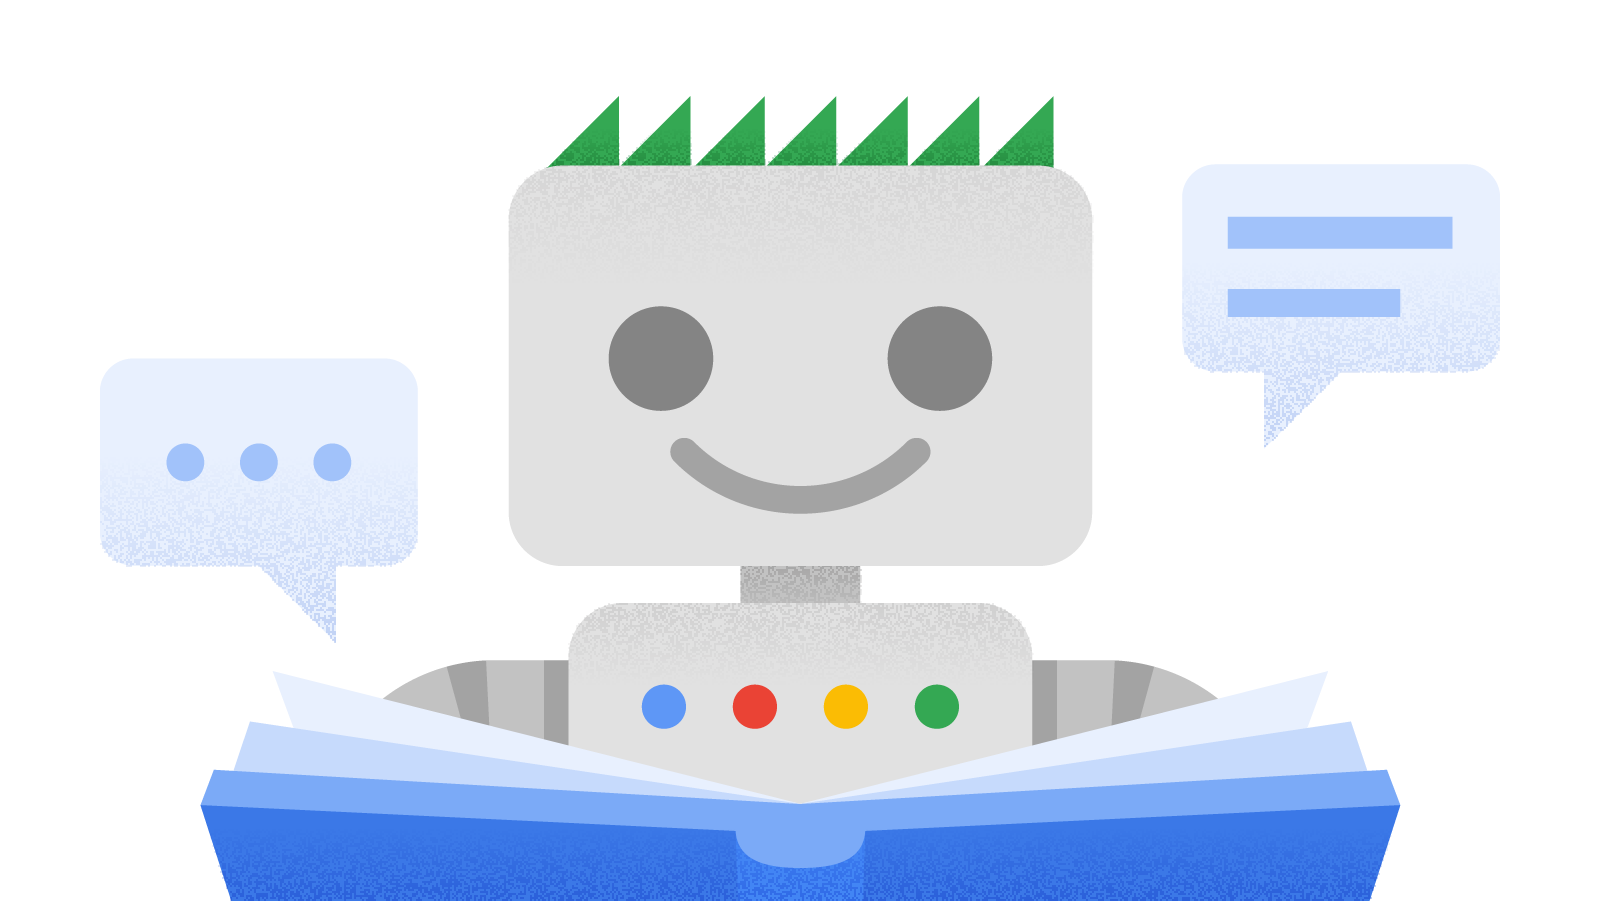 Robot illustration for Google developers.